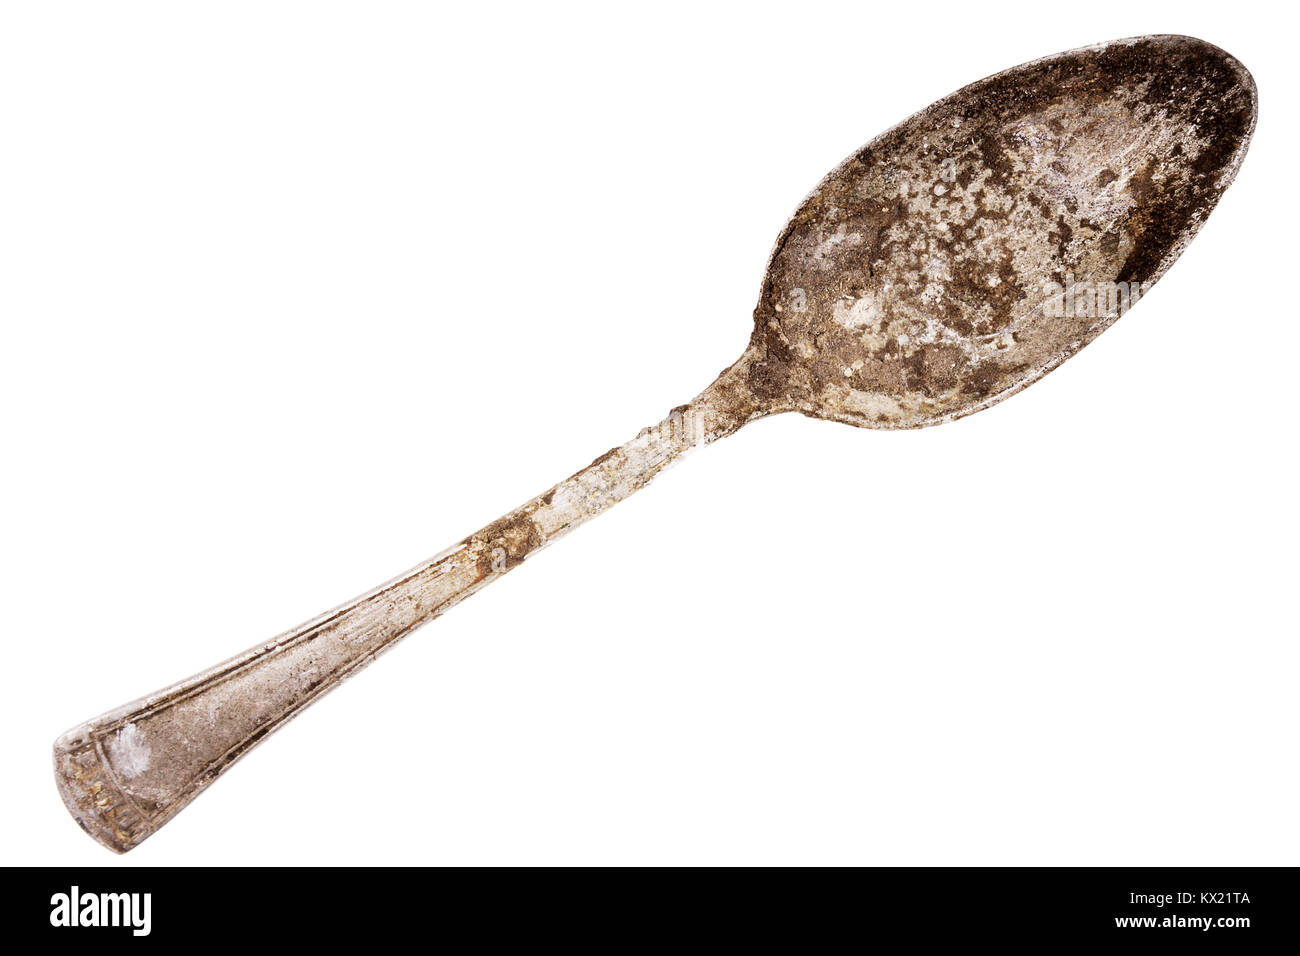 https://c8.alamy.com/comp/KX21TA/antique-dirty-spoon-isolated-on-white-background-KX21TA.jpg